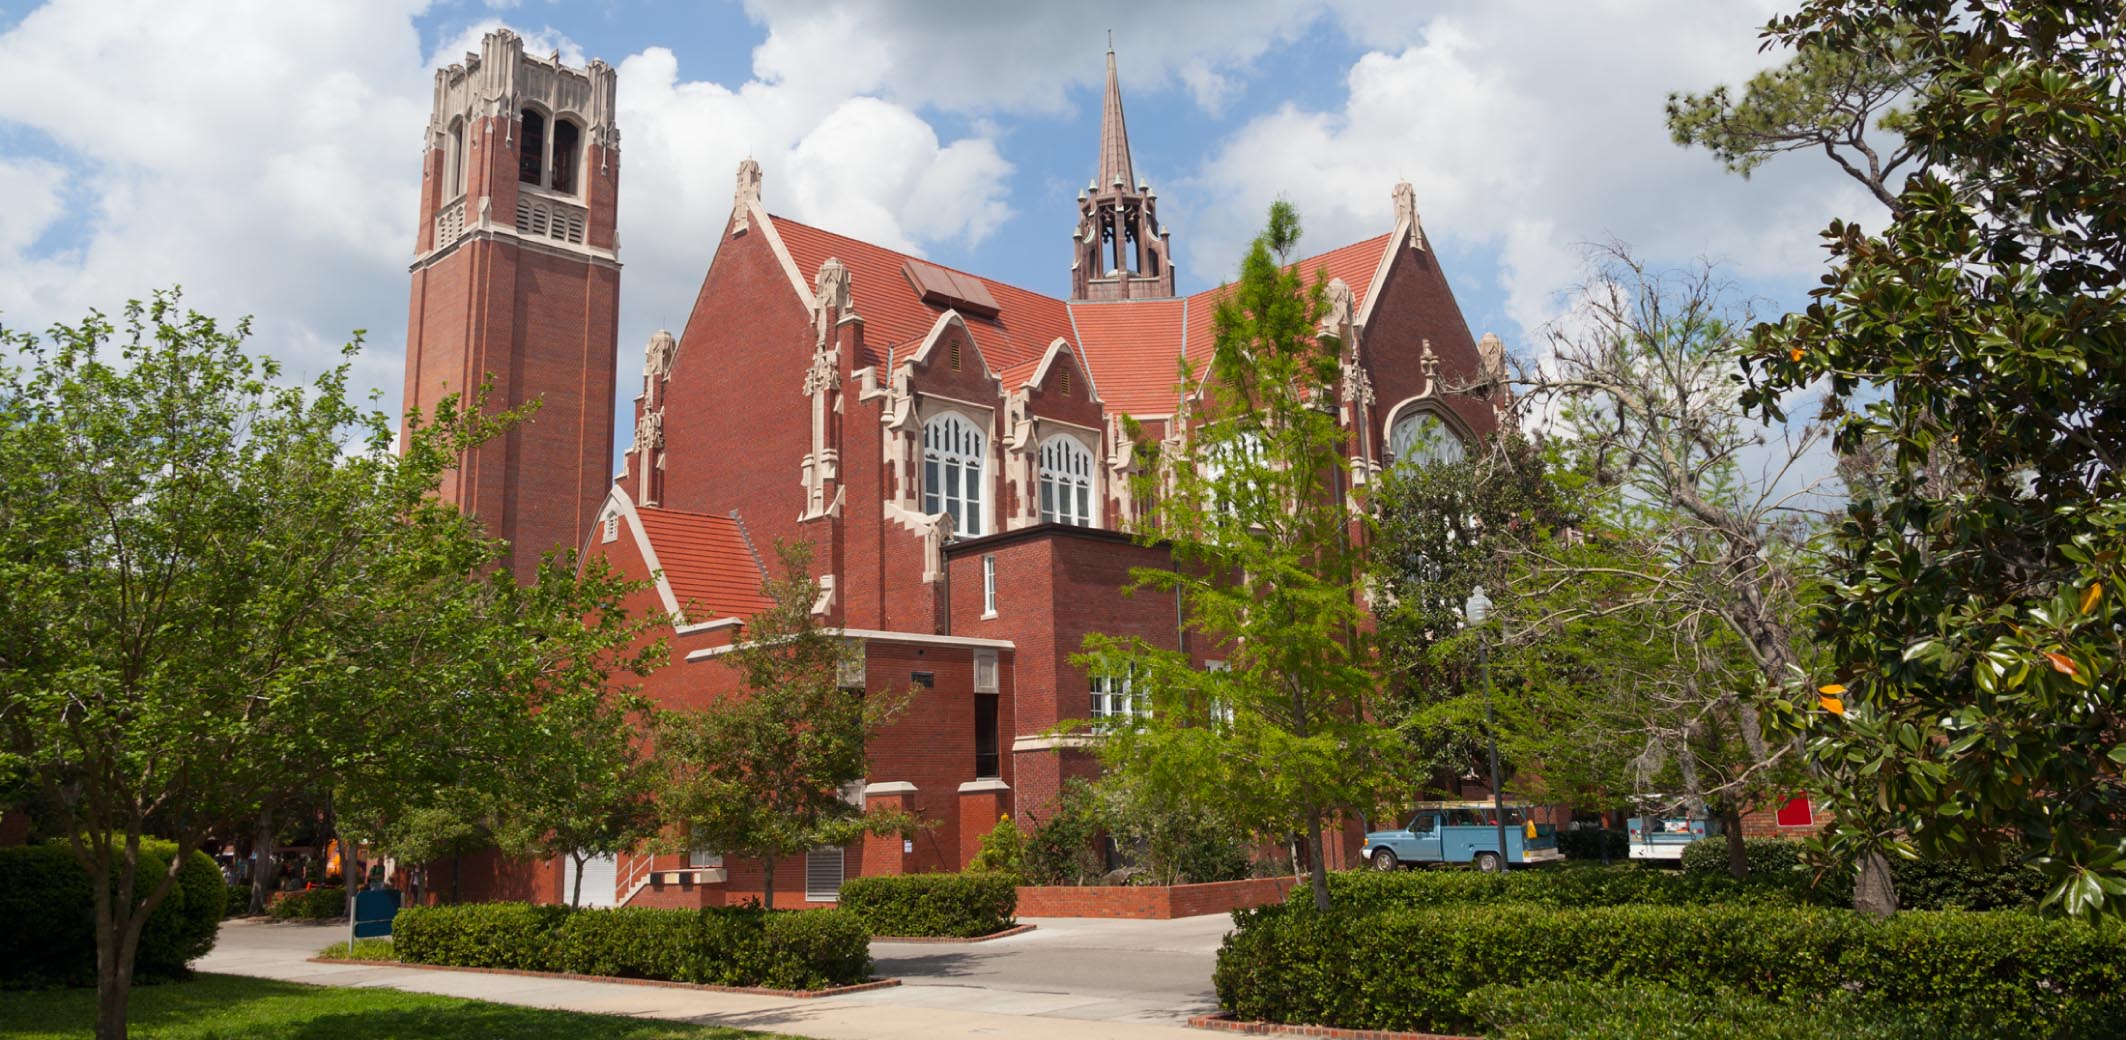 Photo of the University of Florida campus